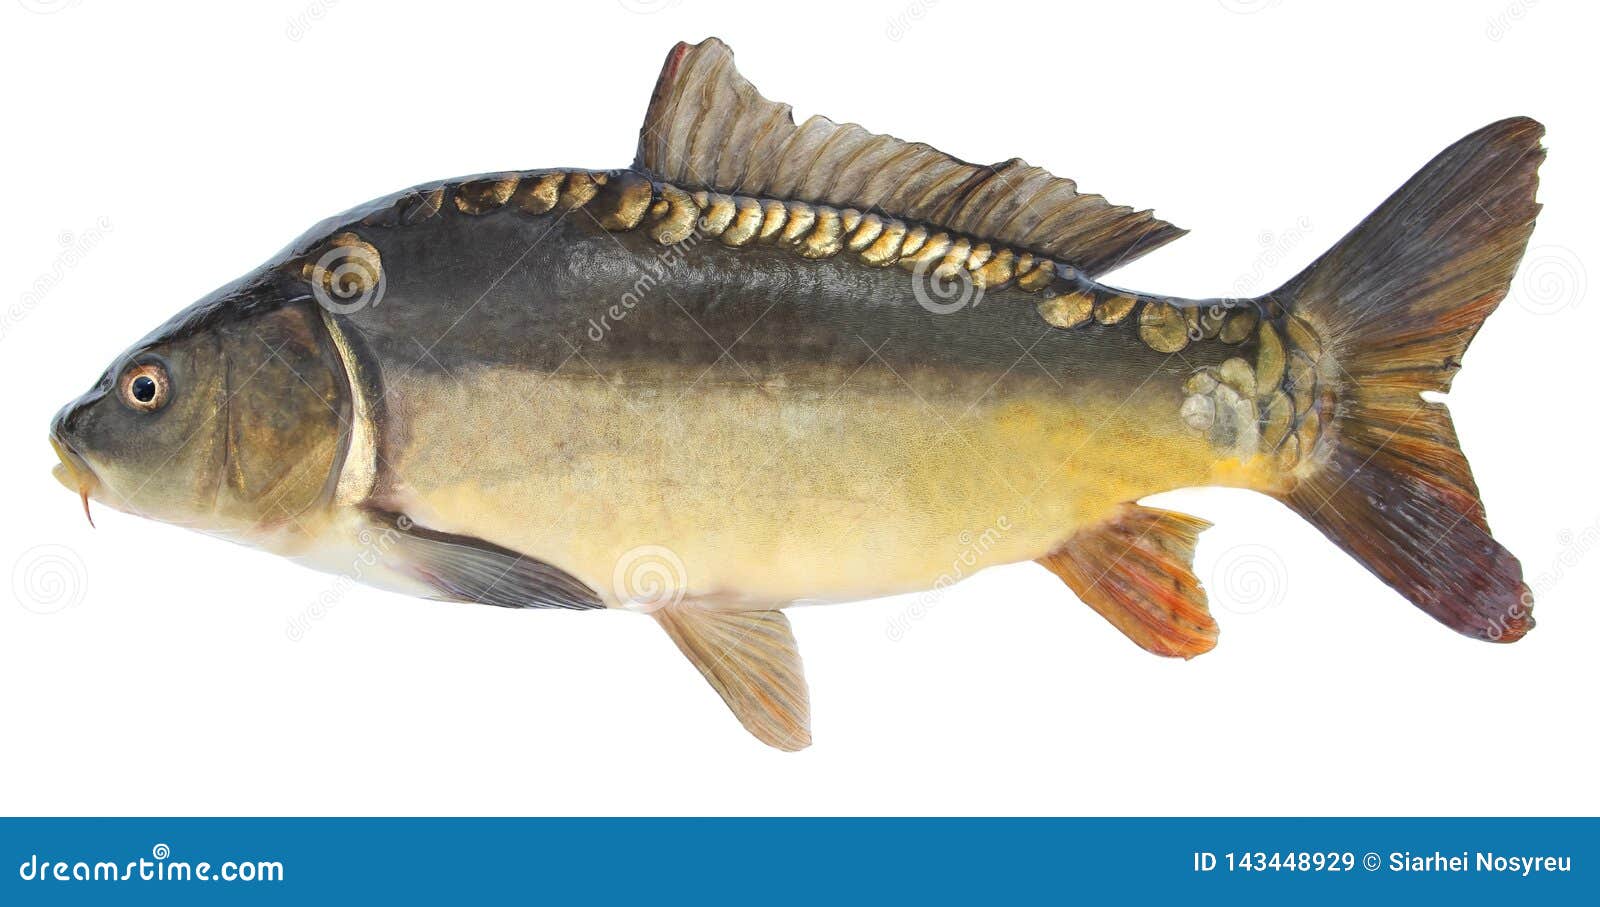 Fish Carp. Freshwater Fish Without Scales Stock Image